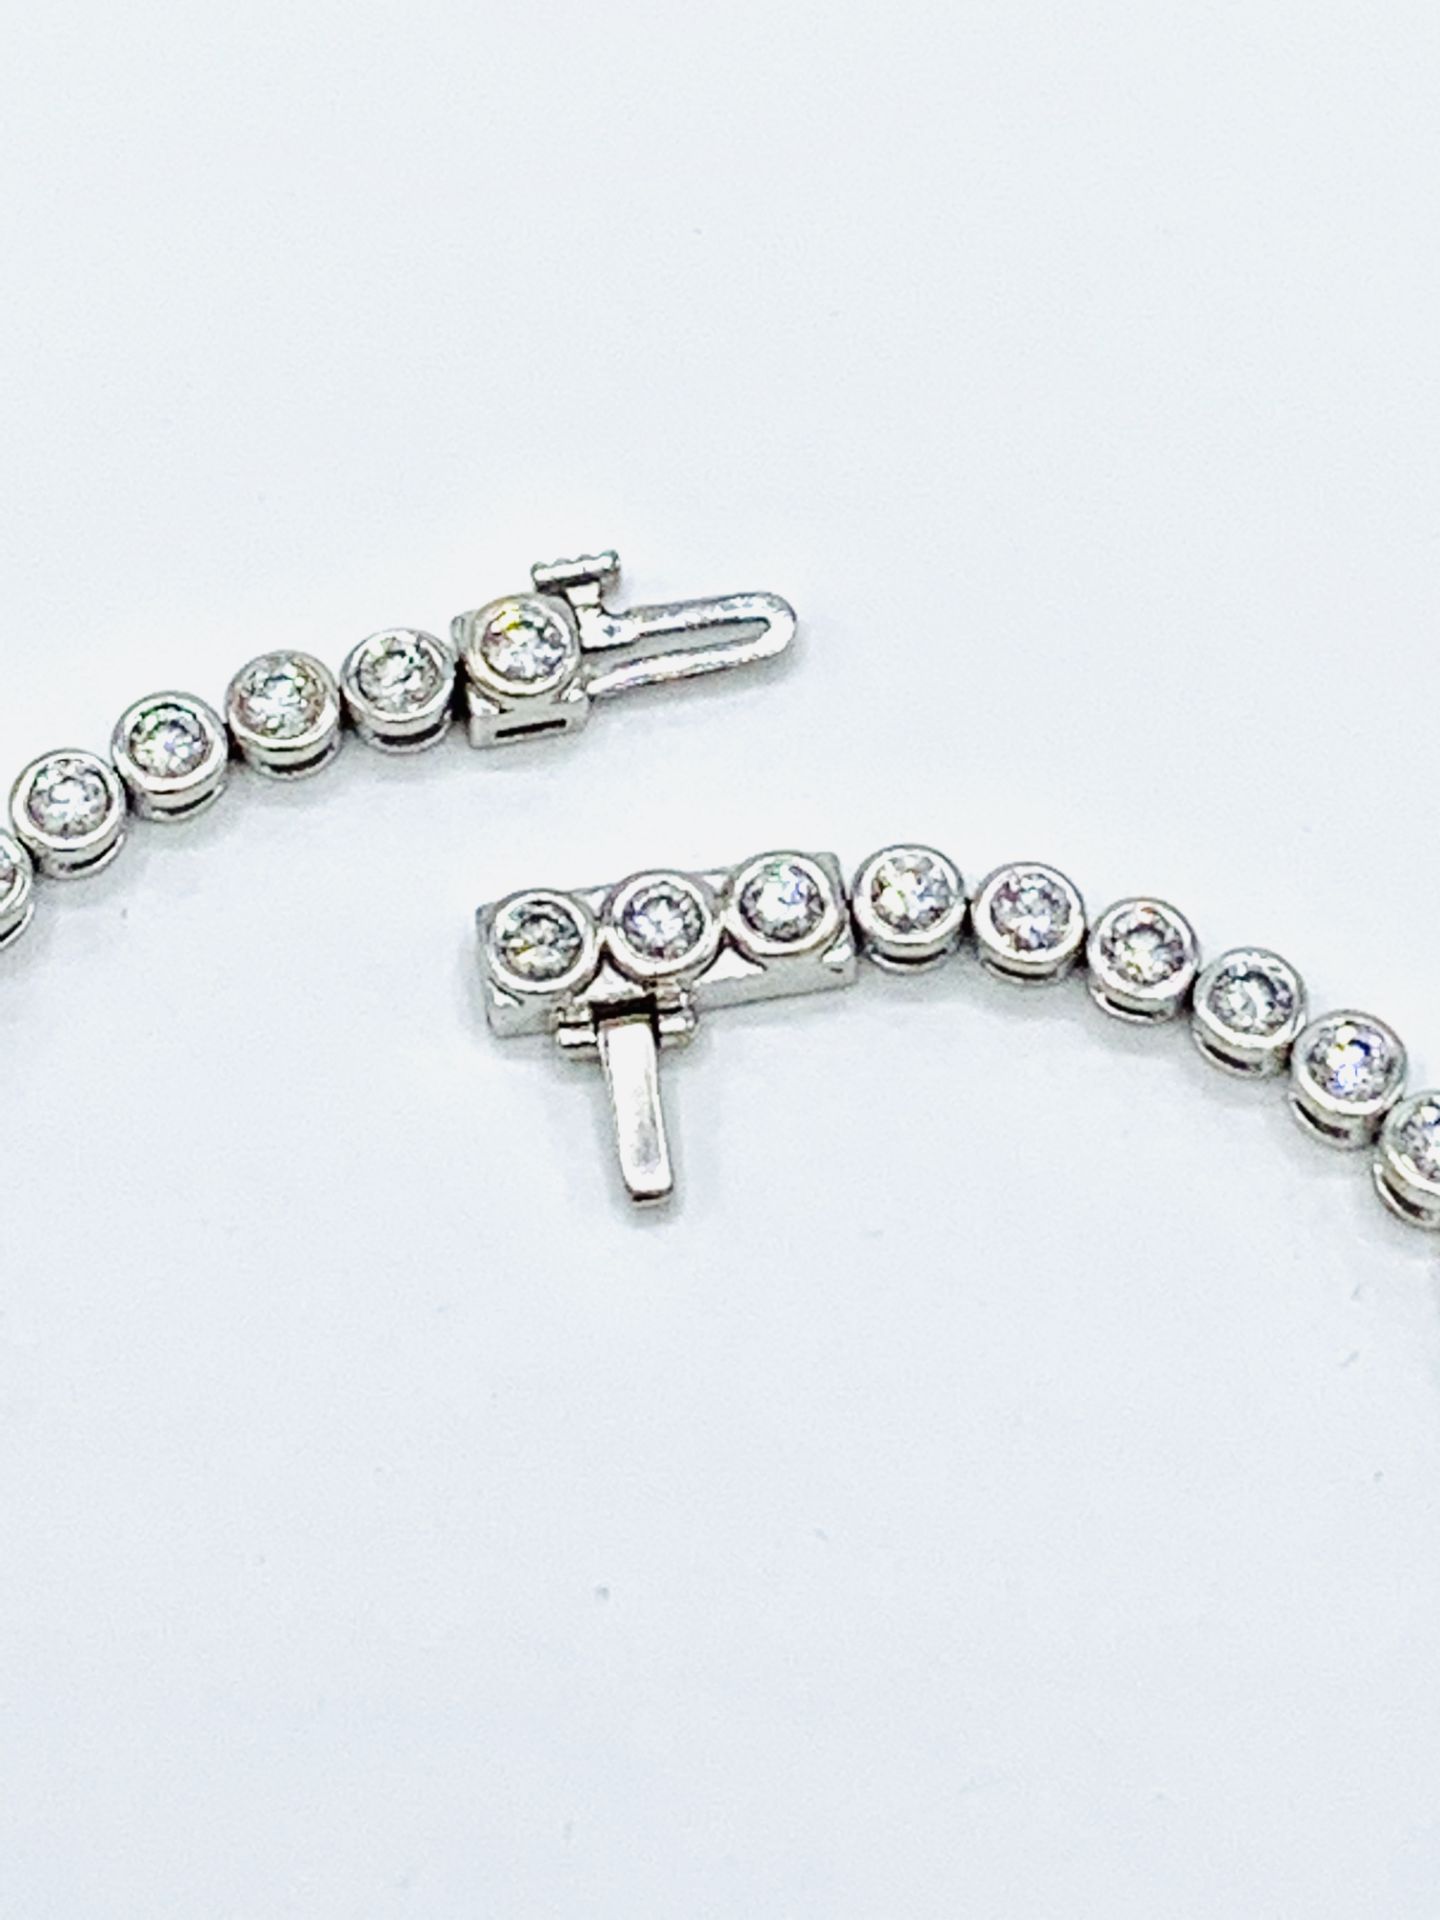 18ct white gold and diamond tennis bracelet. - Image 4 of 7